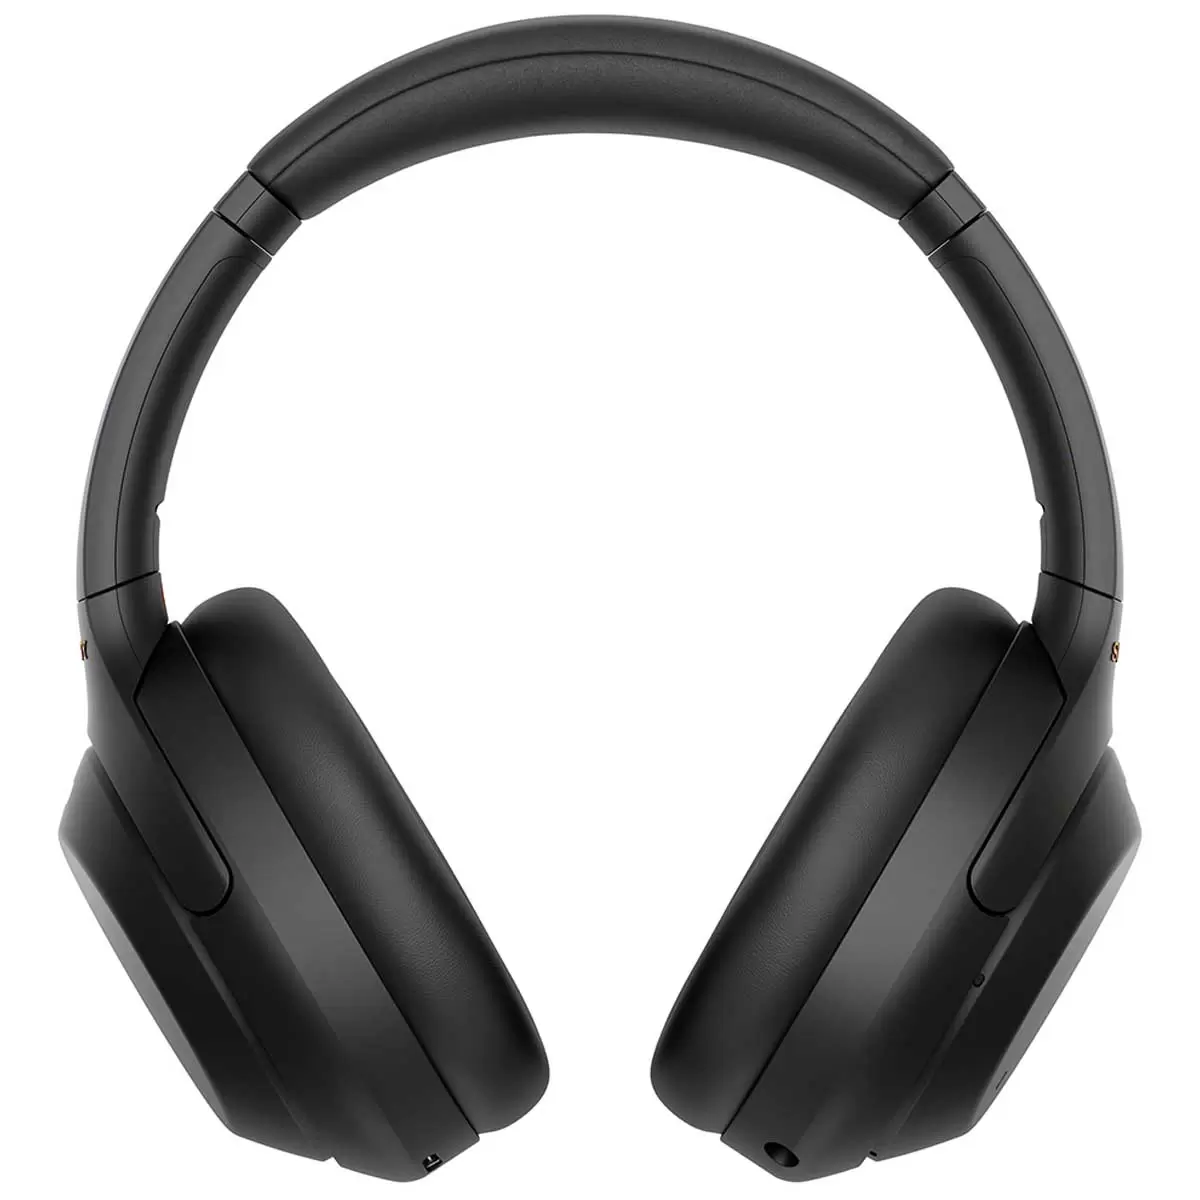 Sony Noise Cancelling Bluetooth Headphones Black WH-1000XM4B